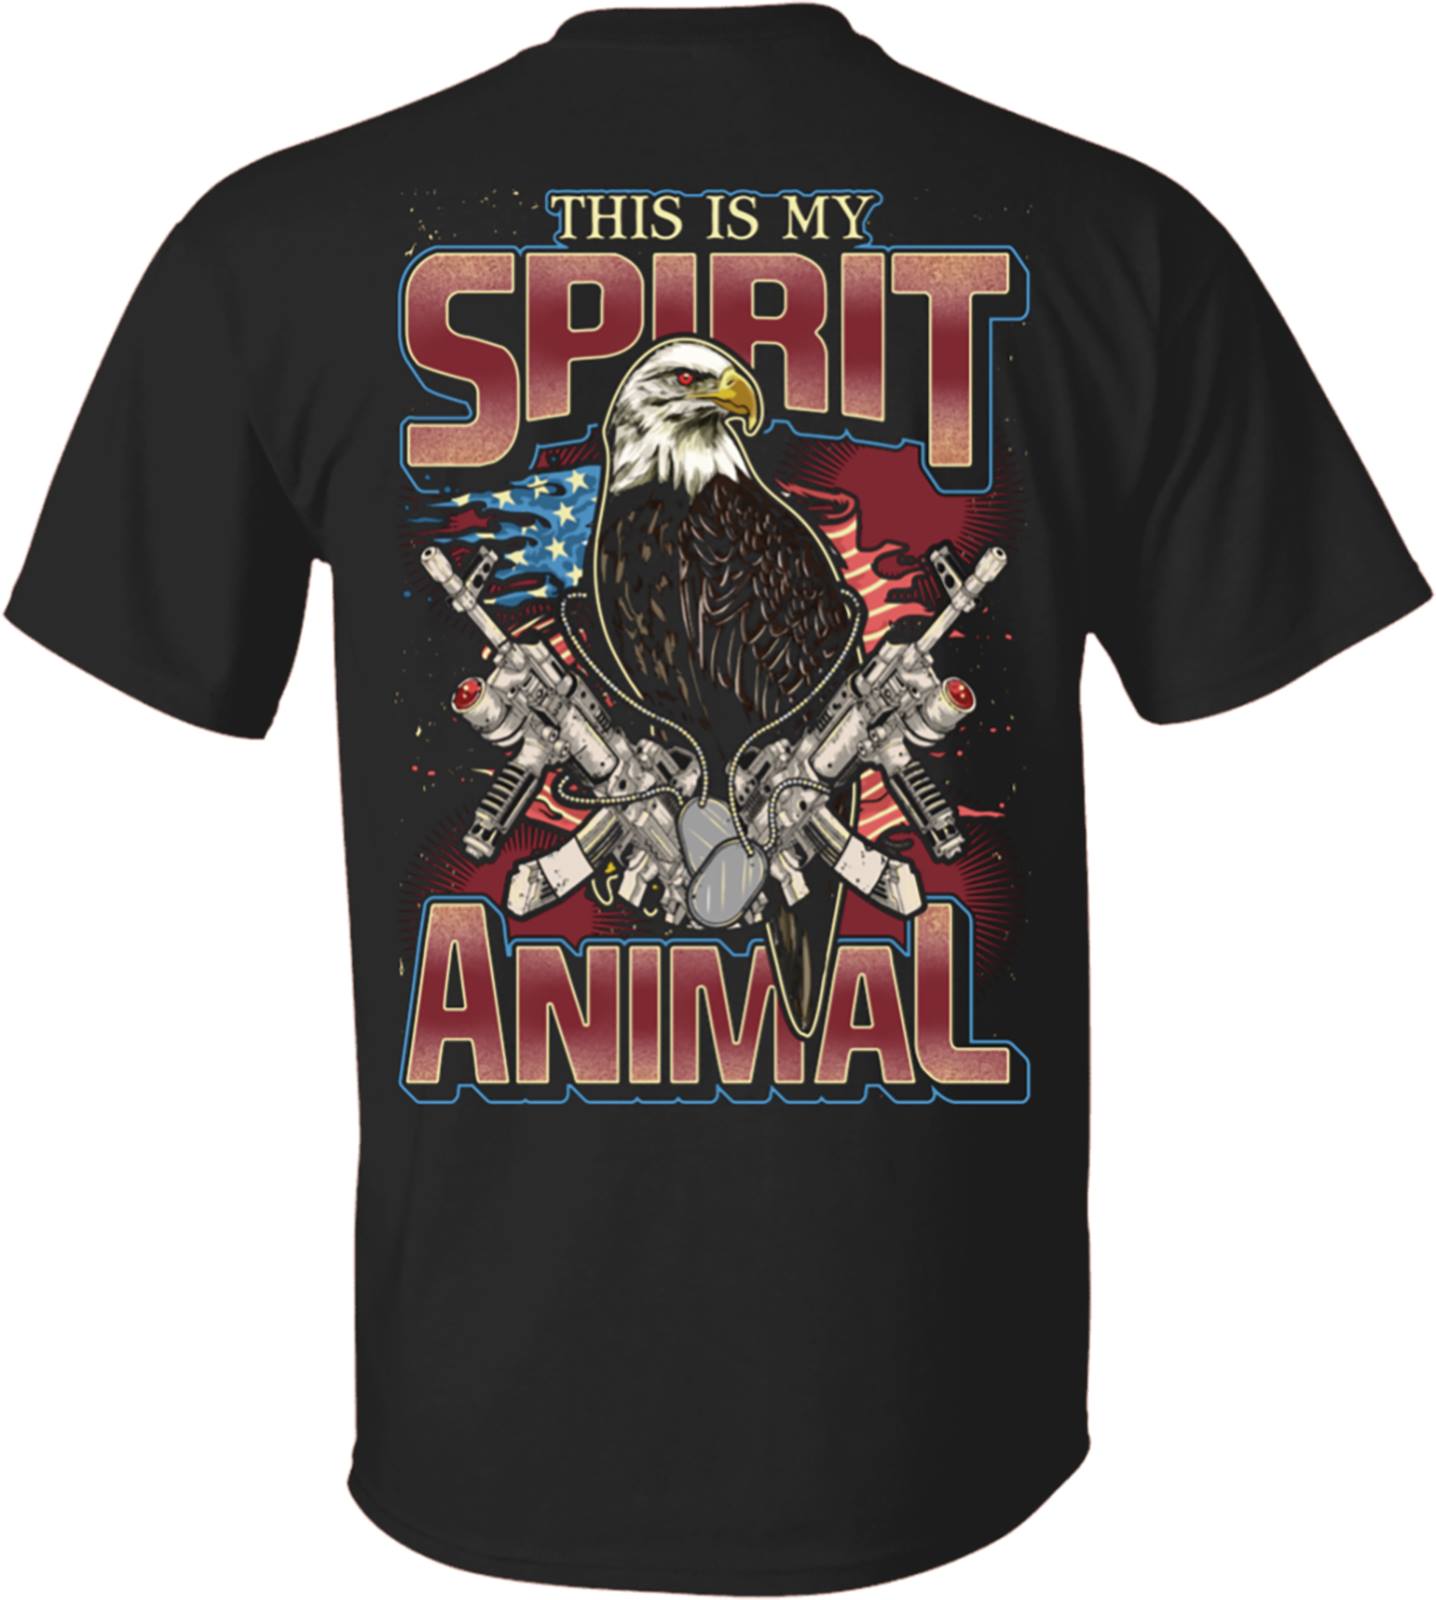 This is my spirit animal - Ealge with gun, america flag